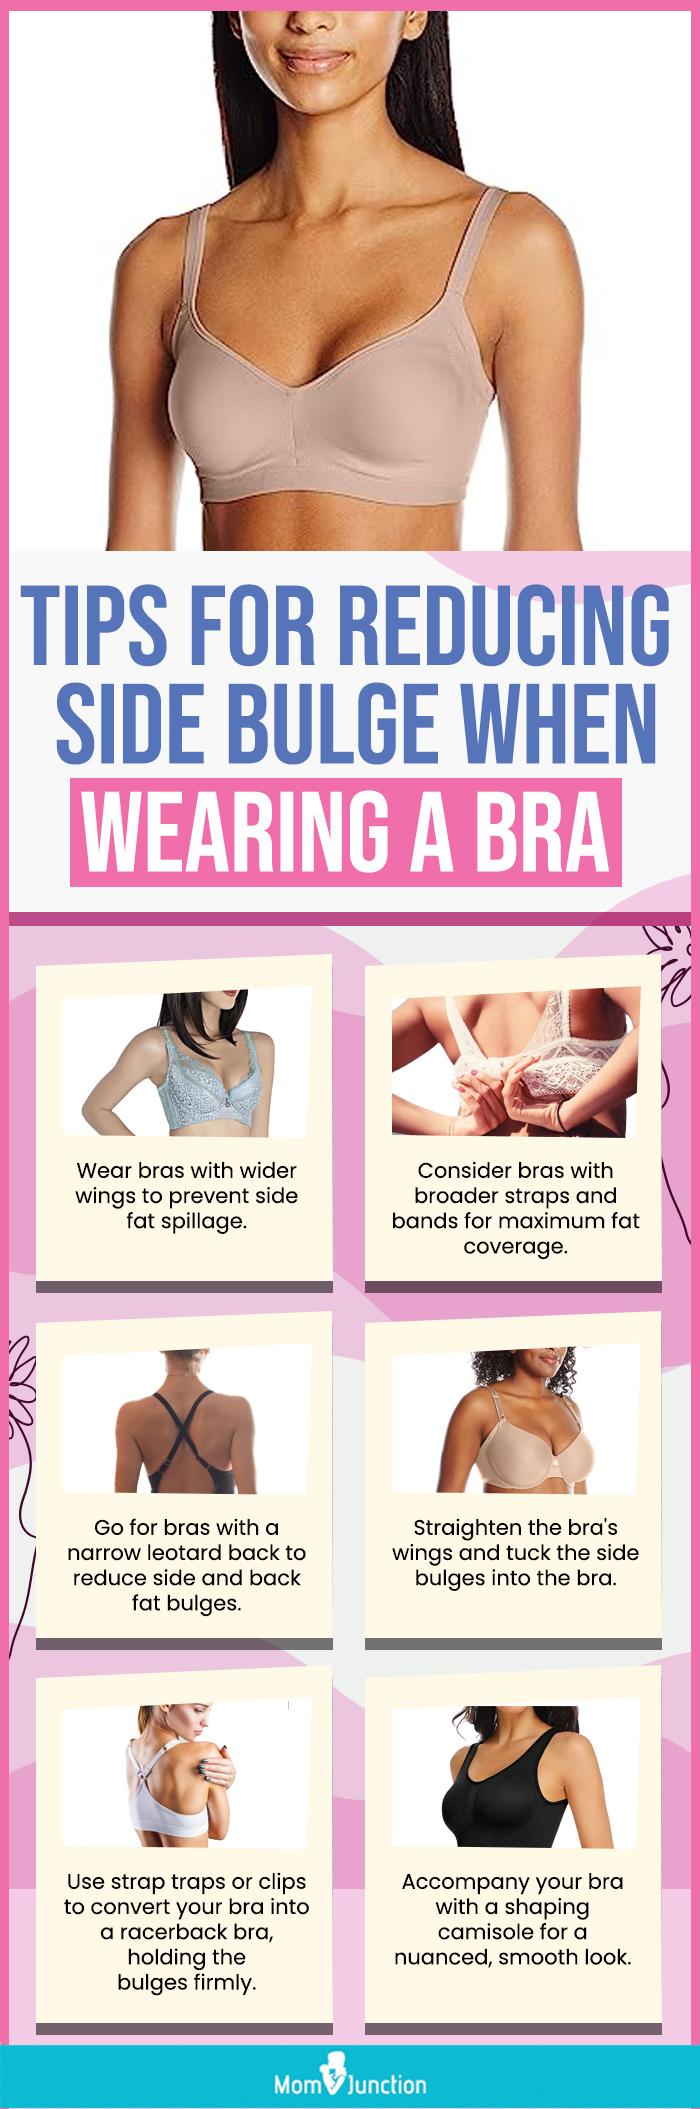 What Causes Bra Bulge?